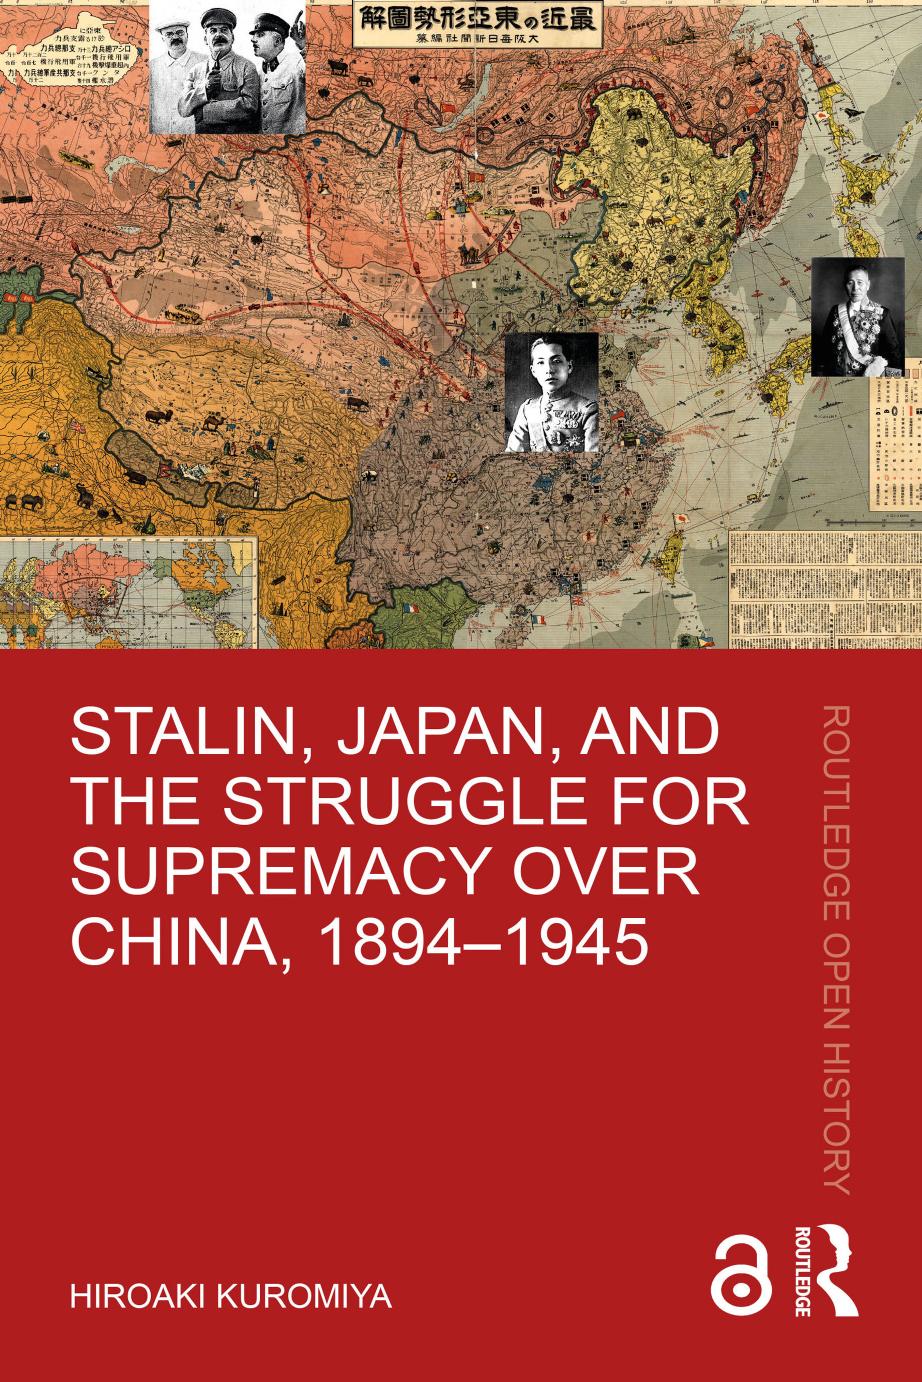 Stalin, Japan, and the Struggle for Supremacy Over China, 1894-1945 by Hiroaki Kuromiya